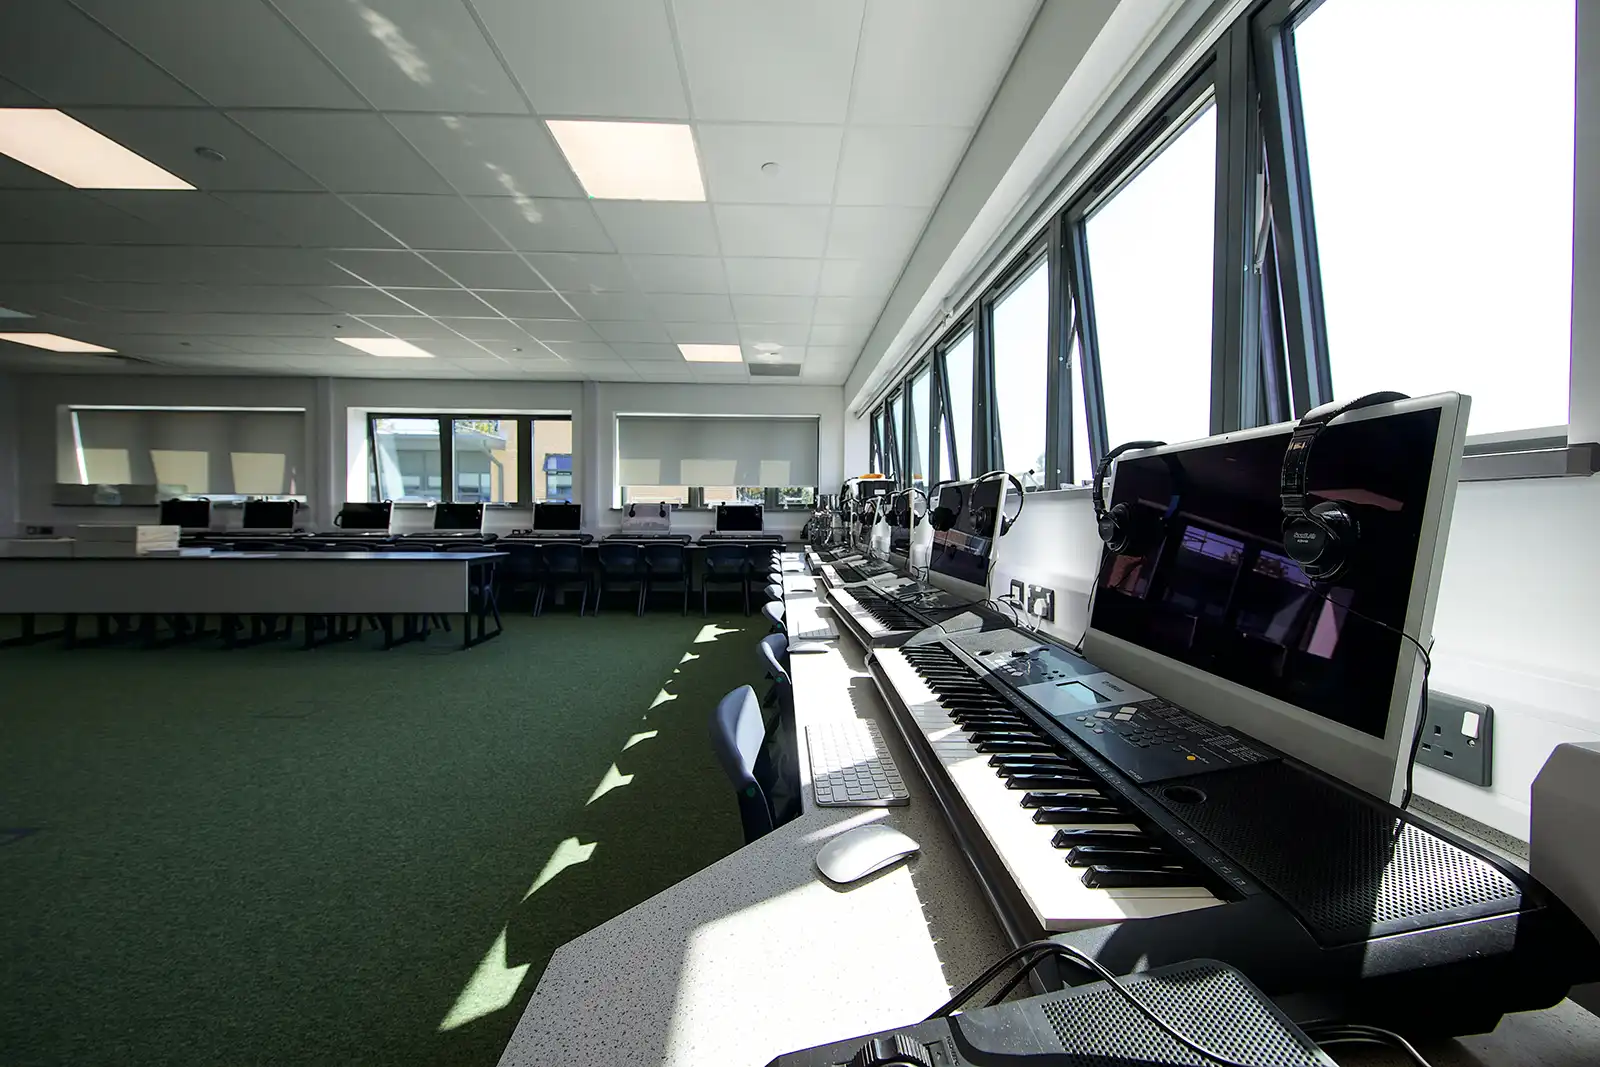 A new music room at Stonehenge School, Amesbury